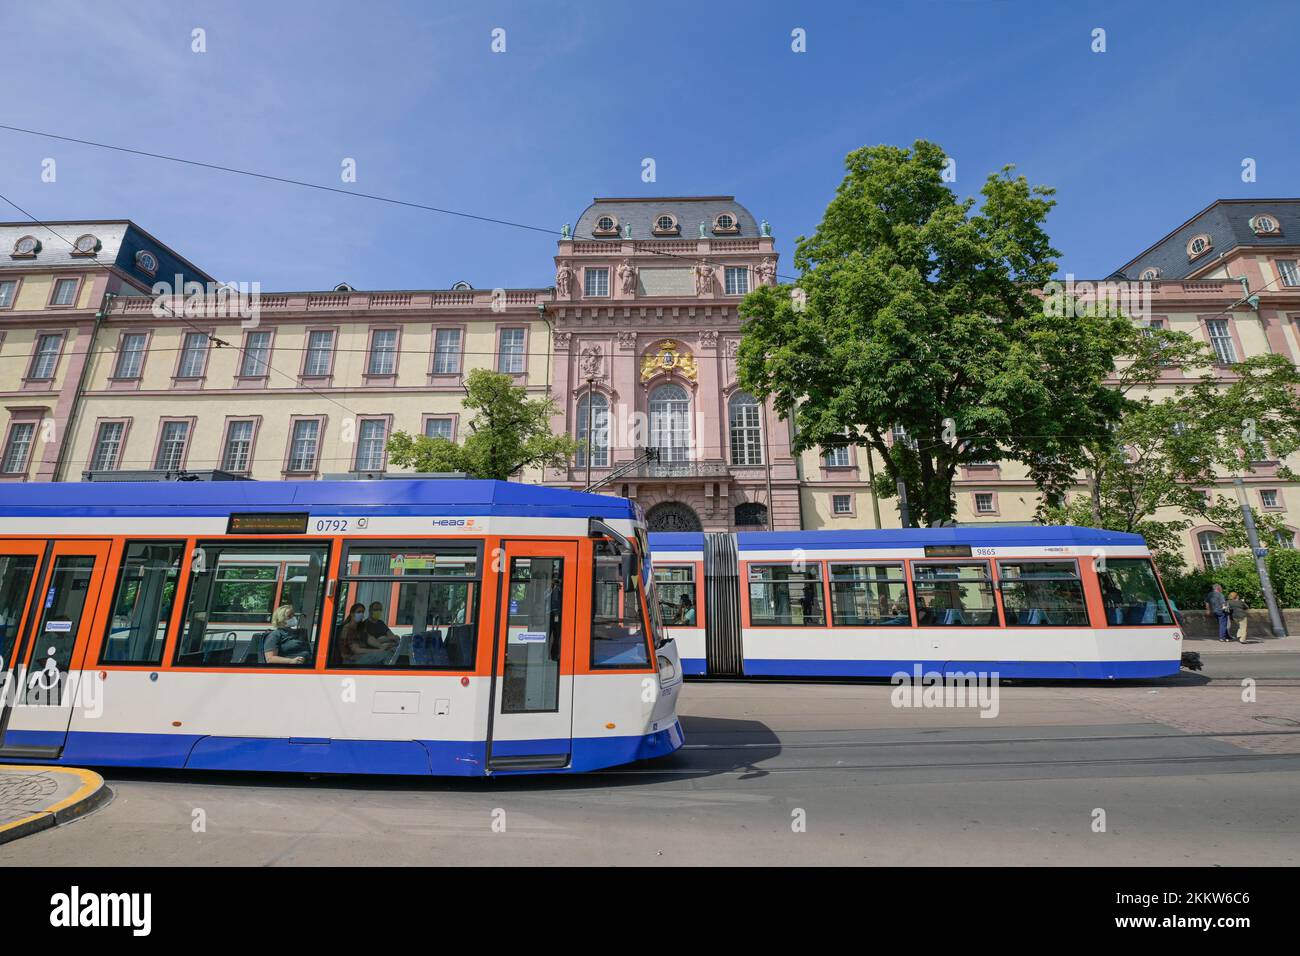 HEAG tramway, Residenzschloss, Marktplatz, Darmstadt, Hesse, Germany, Europe Stock Photo